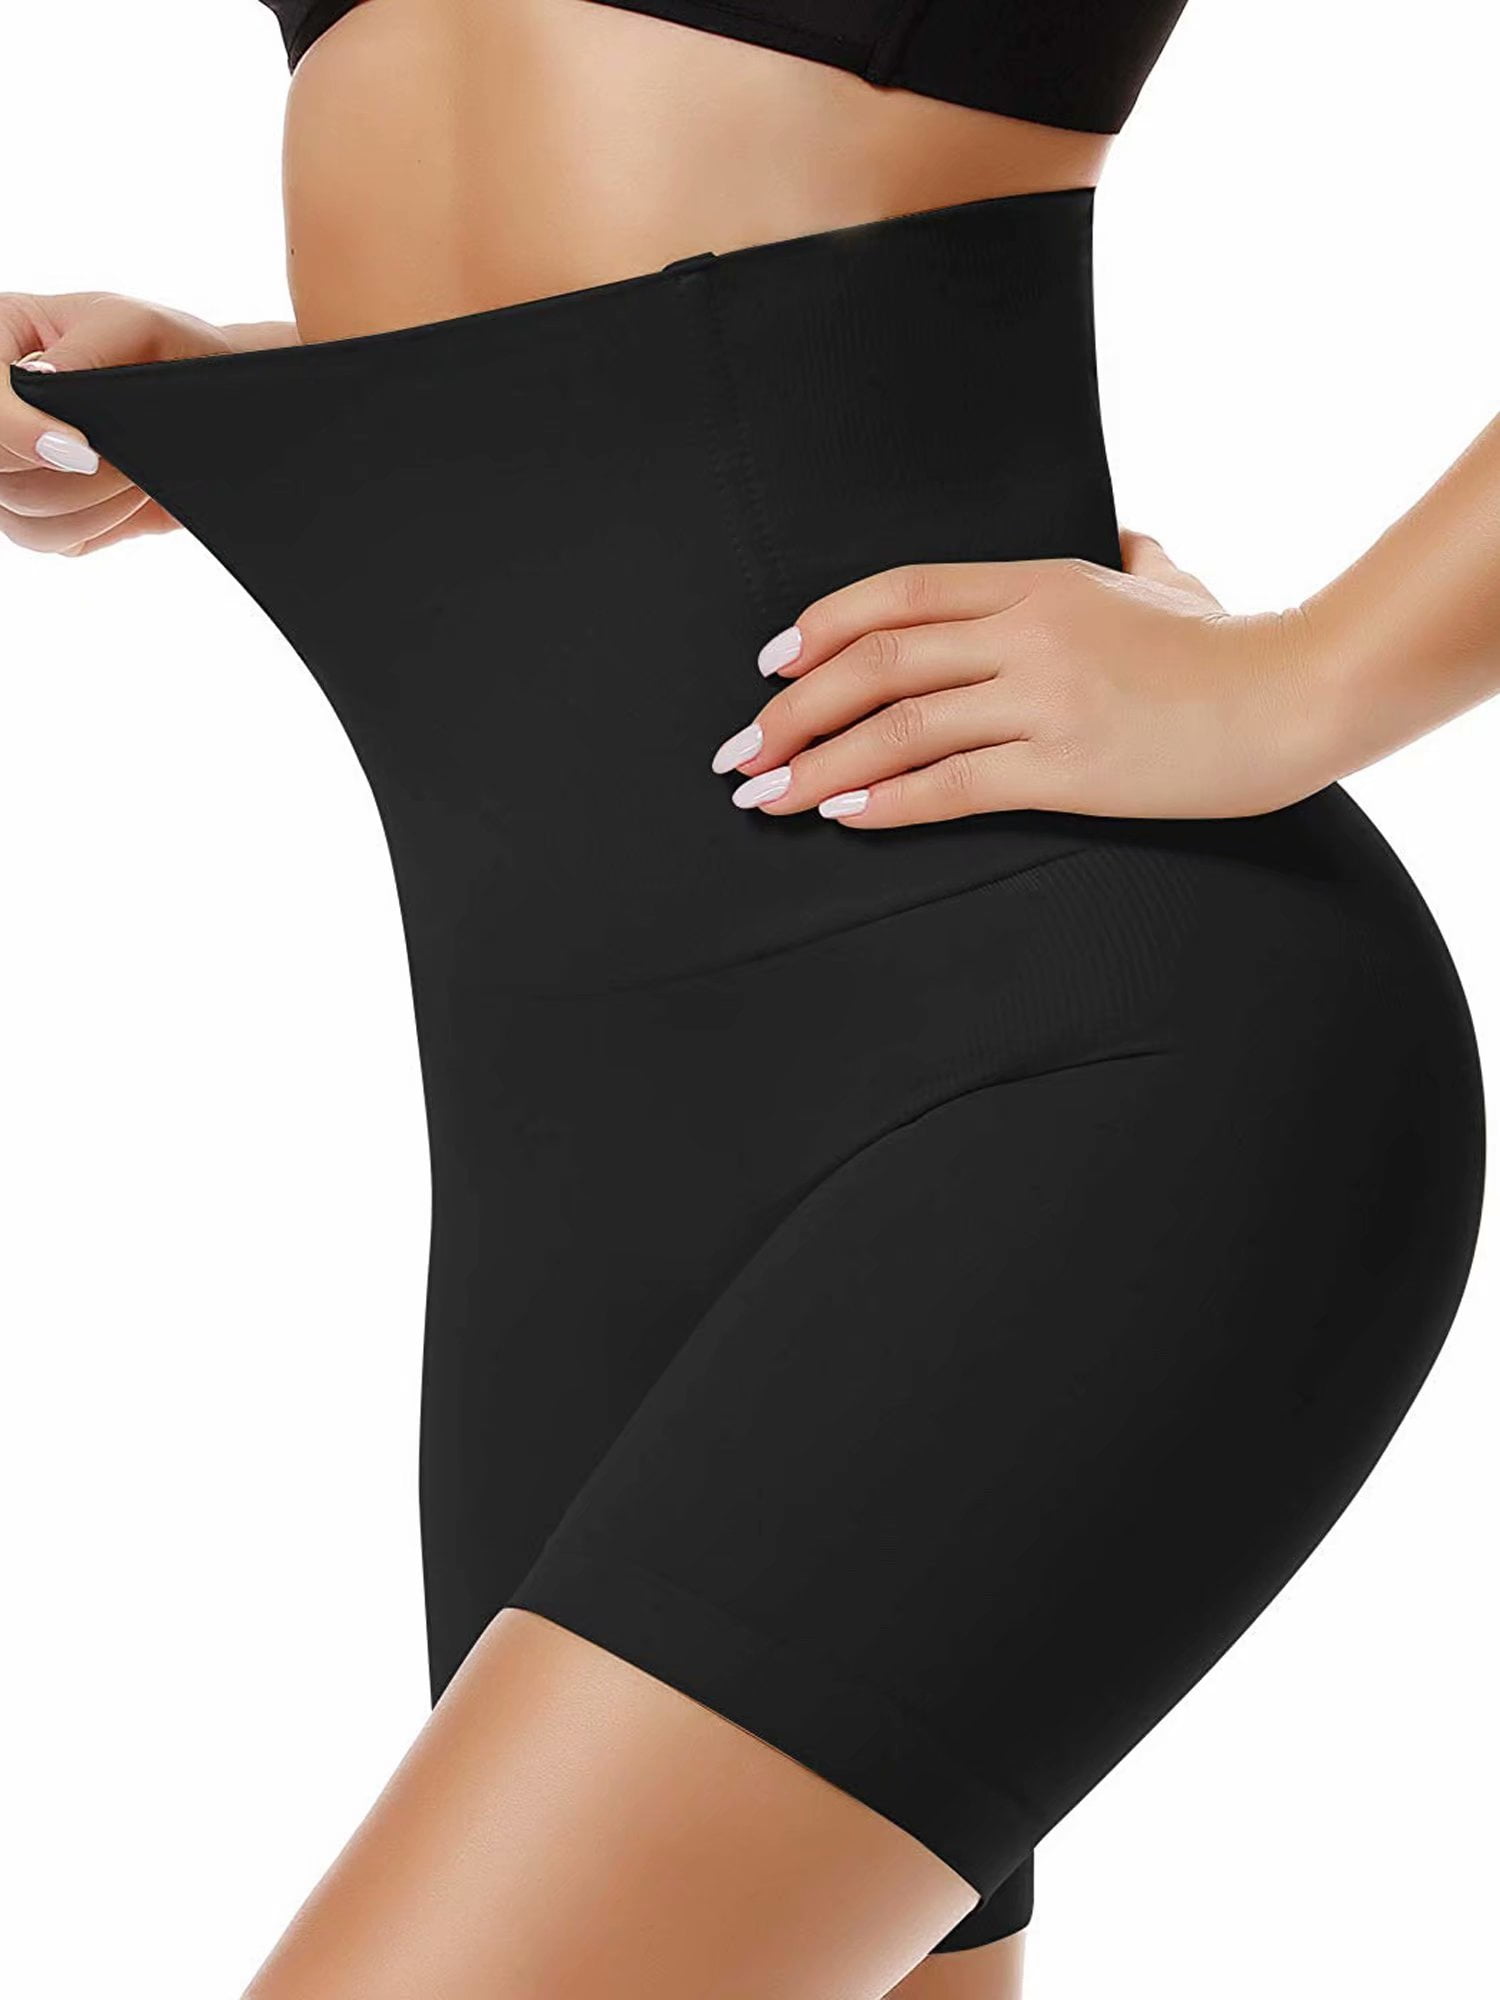 Joyshaper High Waist Shapewear Shorts for Women Tummy Control Knickers Thigh Slimmer Slimming Shaping Panties Body Shaper Pants Underwear